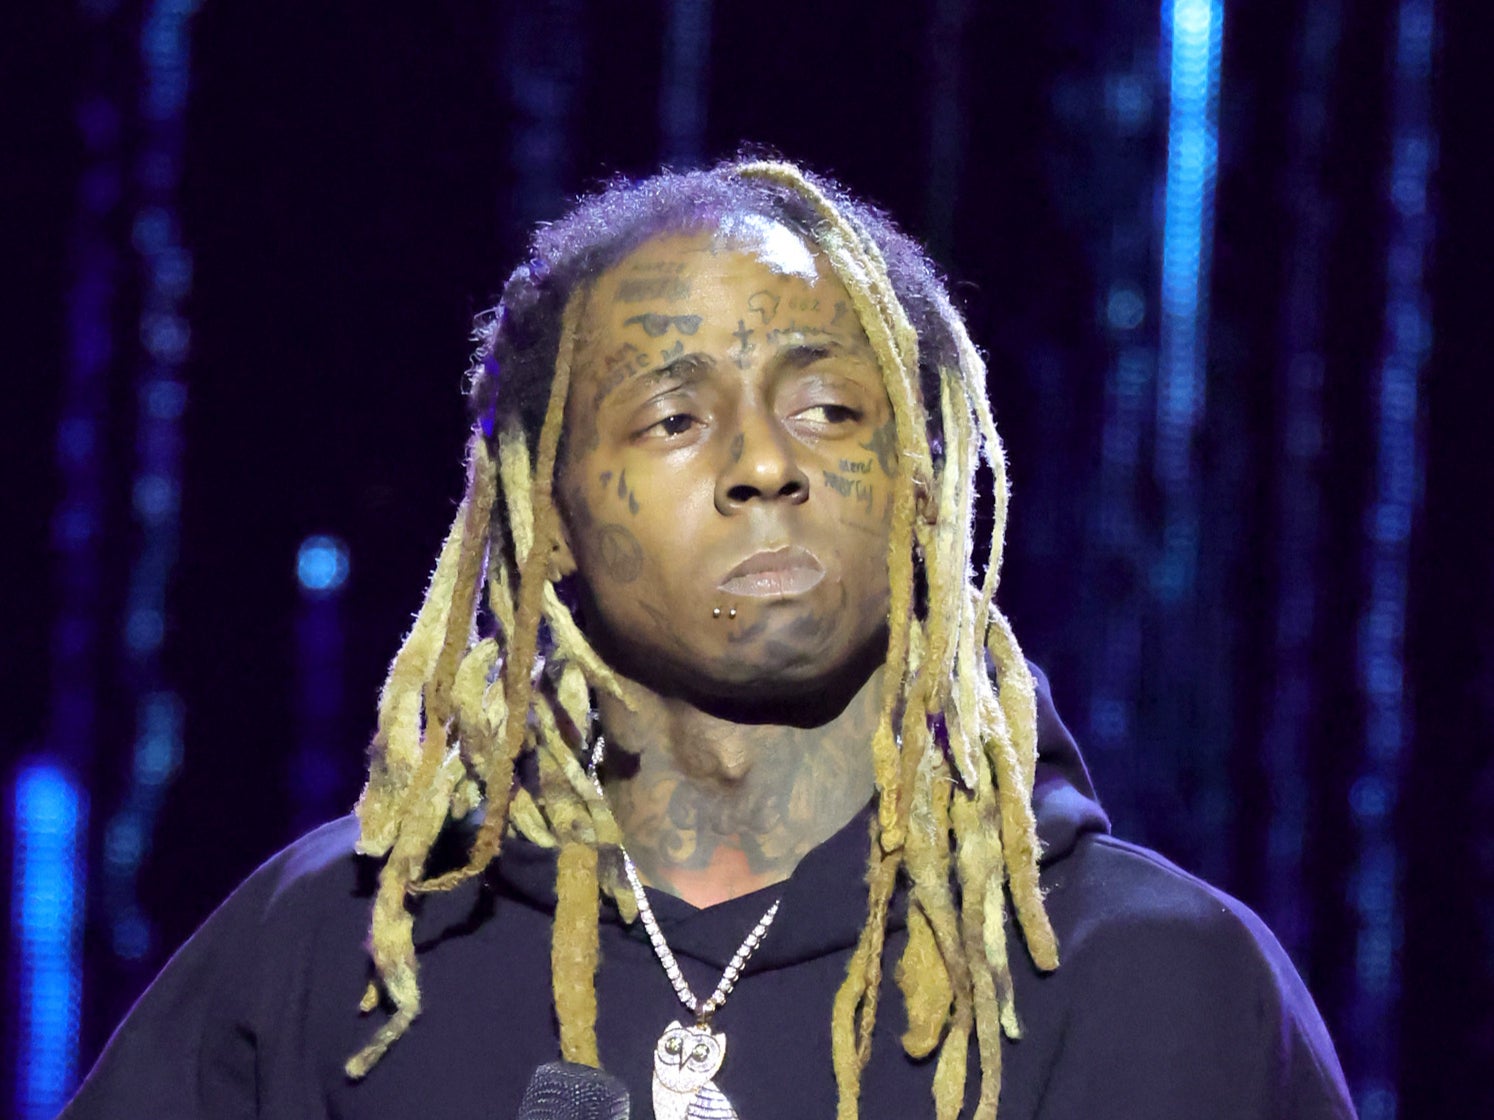 Lil Wayne alive and kicking